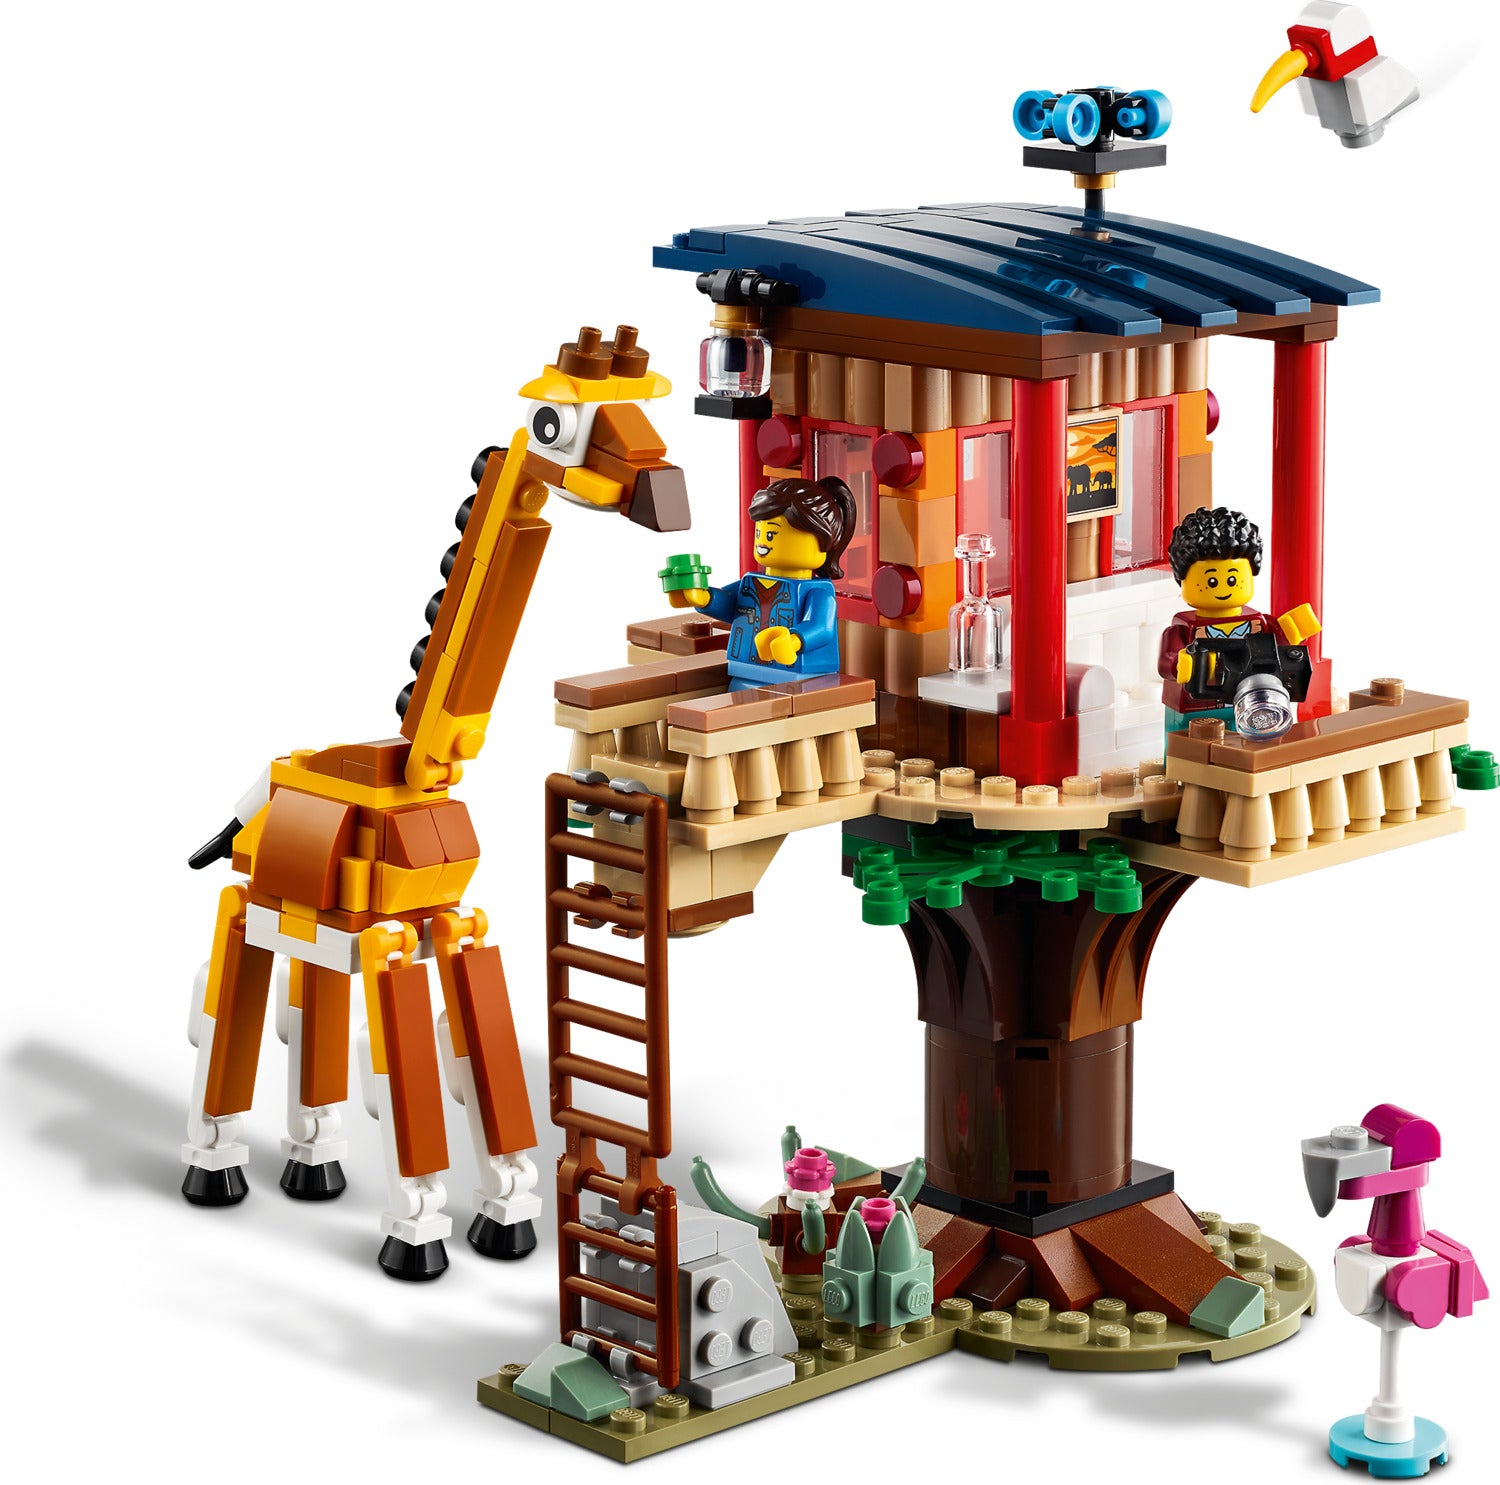 LEGO® Creator 3-in-1: Safari Wildlife Tree House